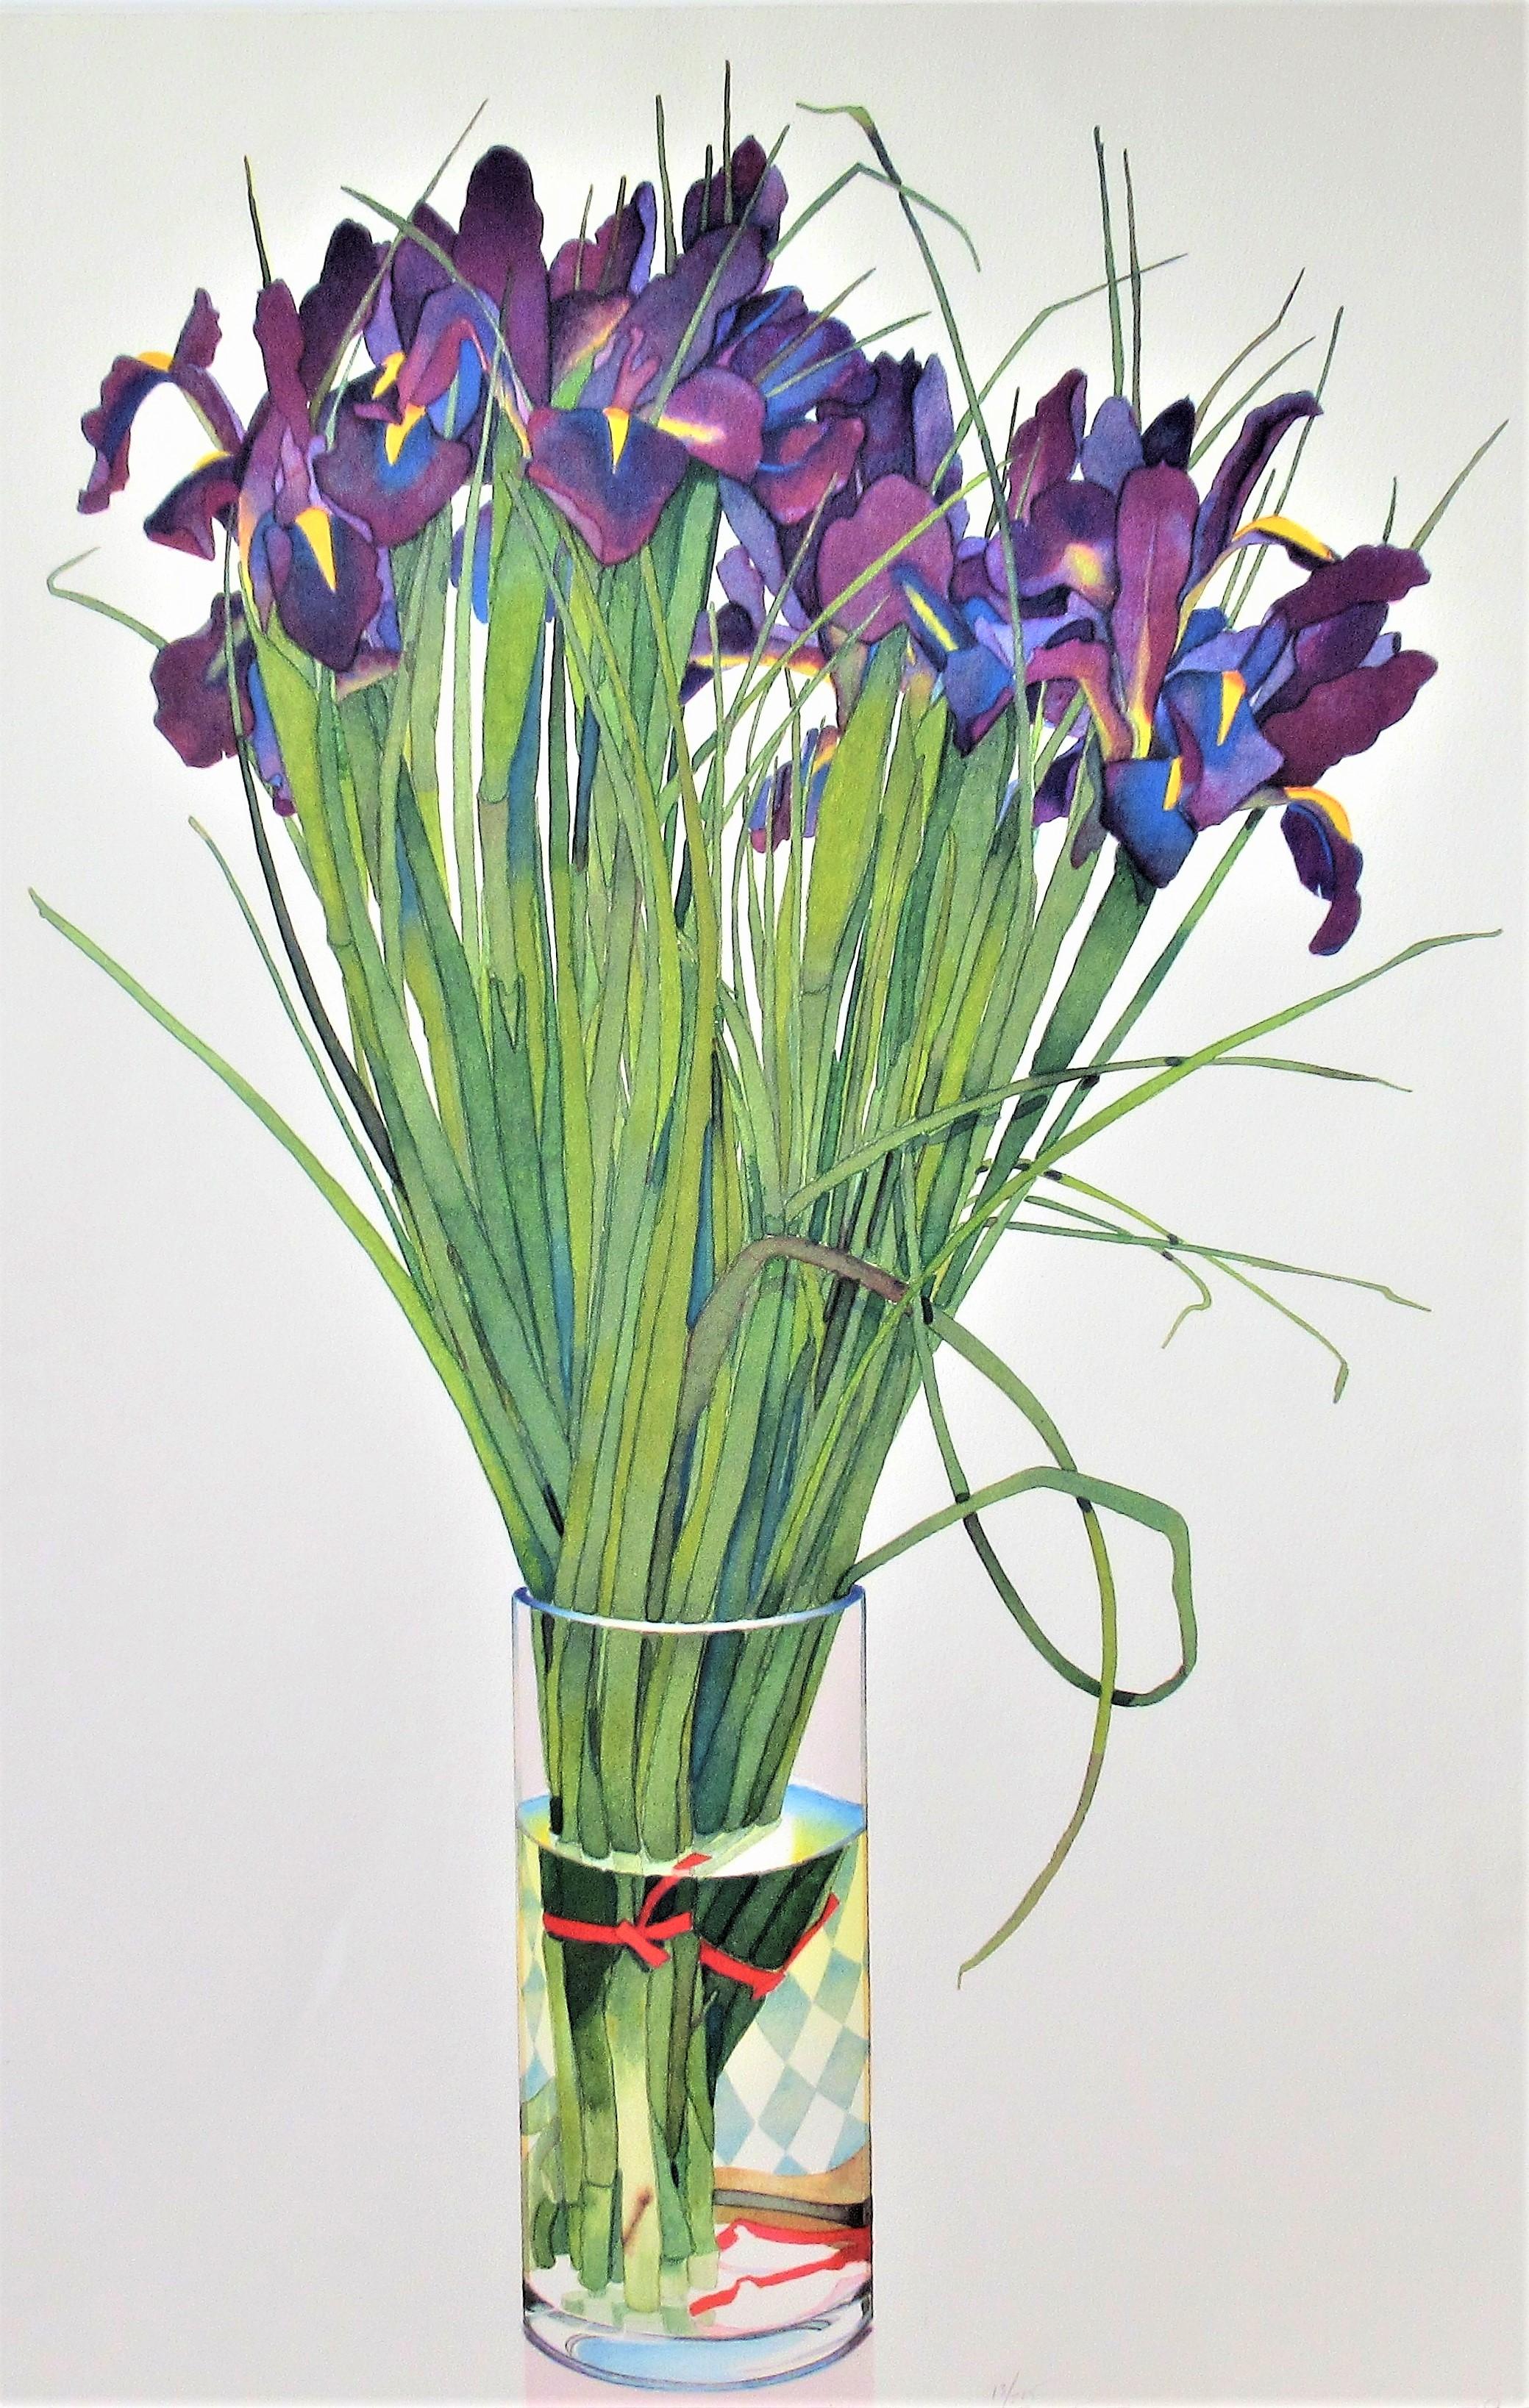 Iris in a Vase - Print by Gary Bukovnik